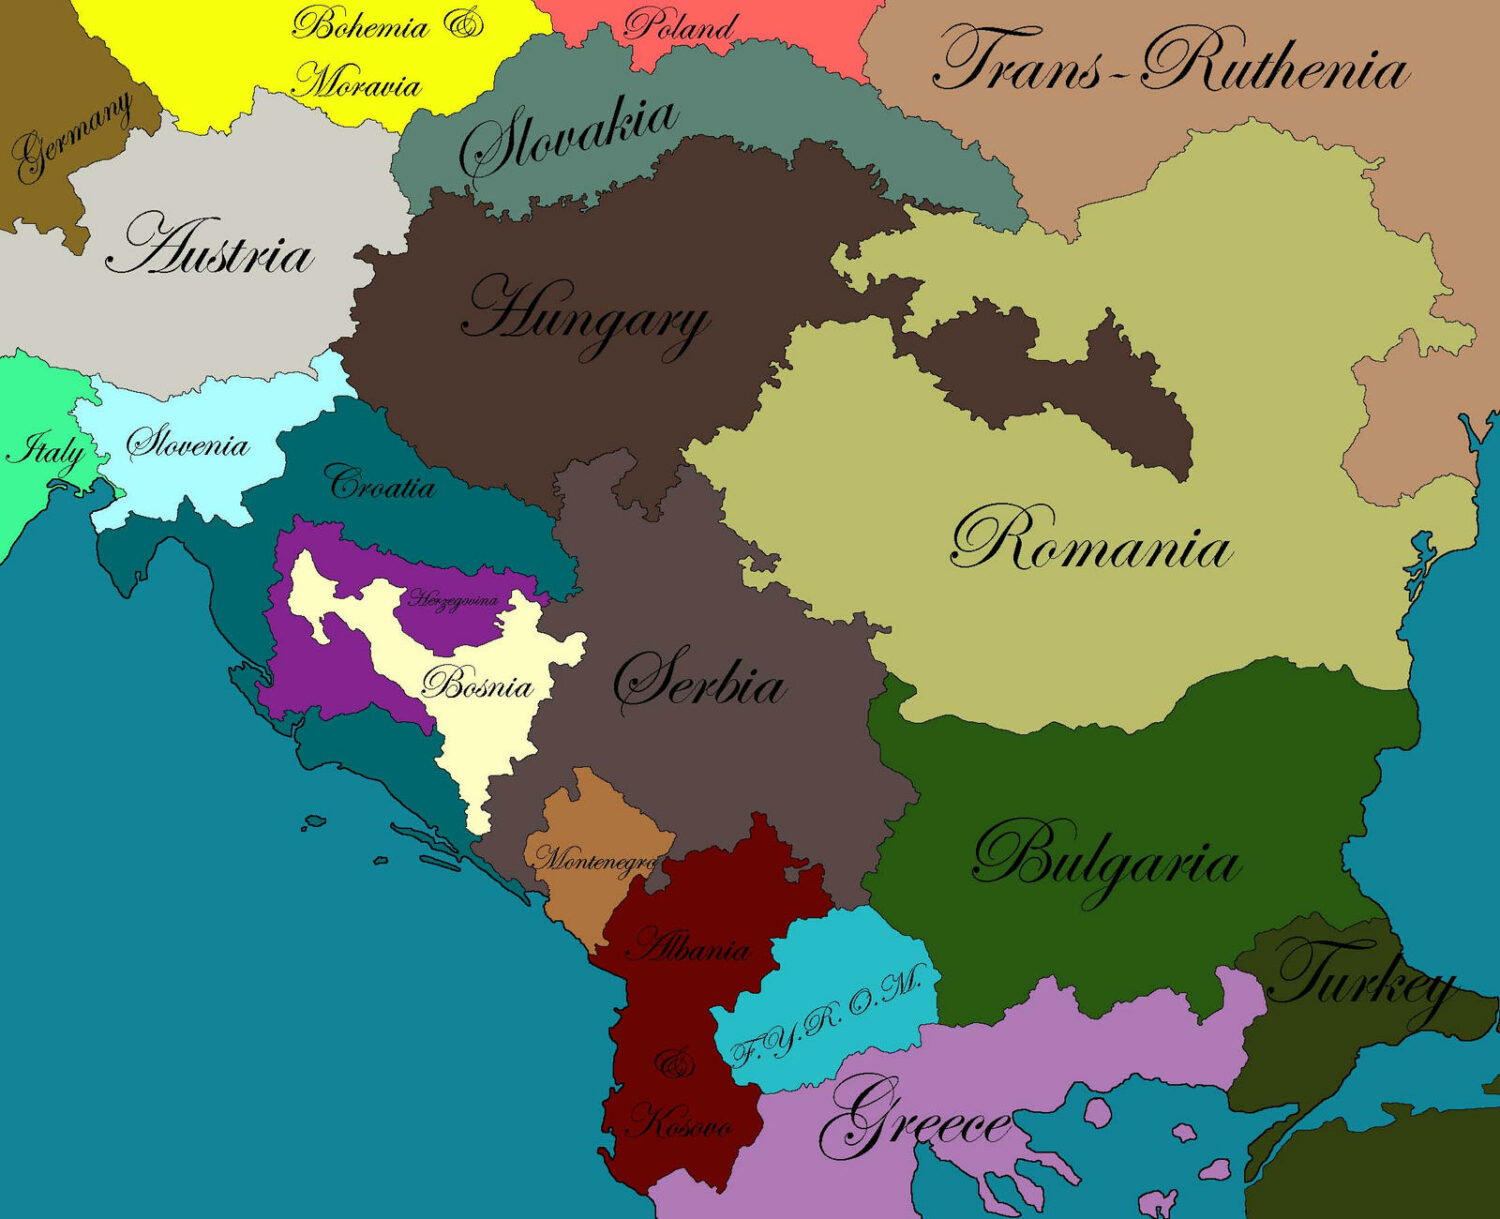 an_idealistic_map_of_the_balkans_by_samuelberry_dbq0lfm-fullview